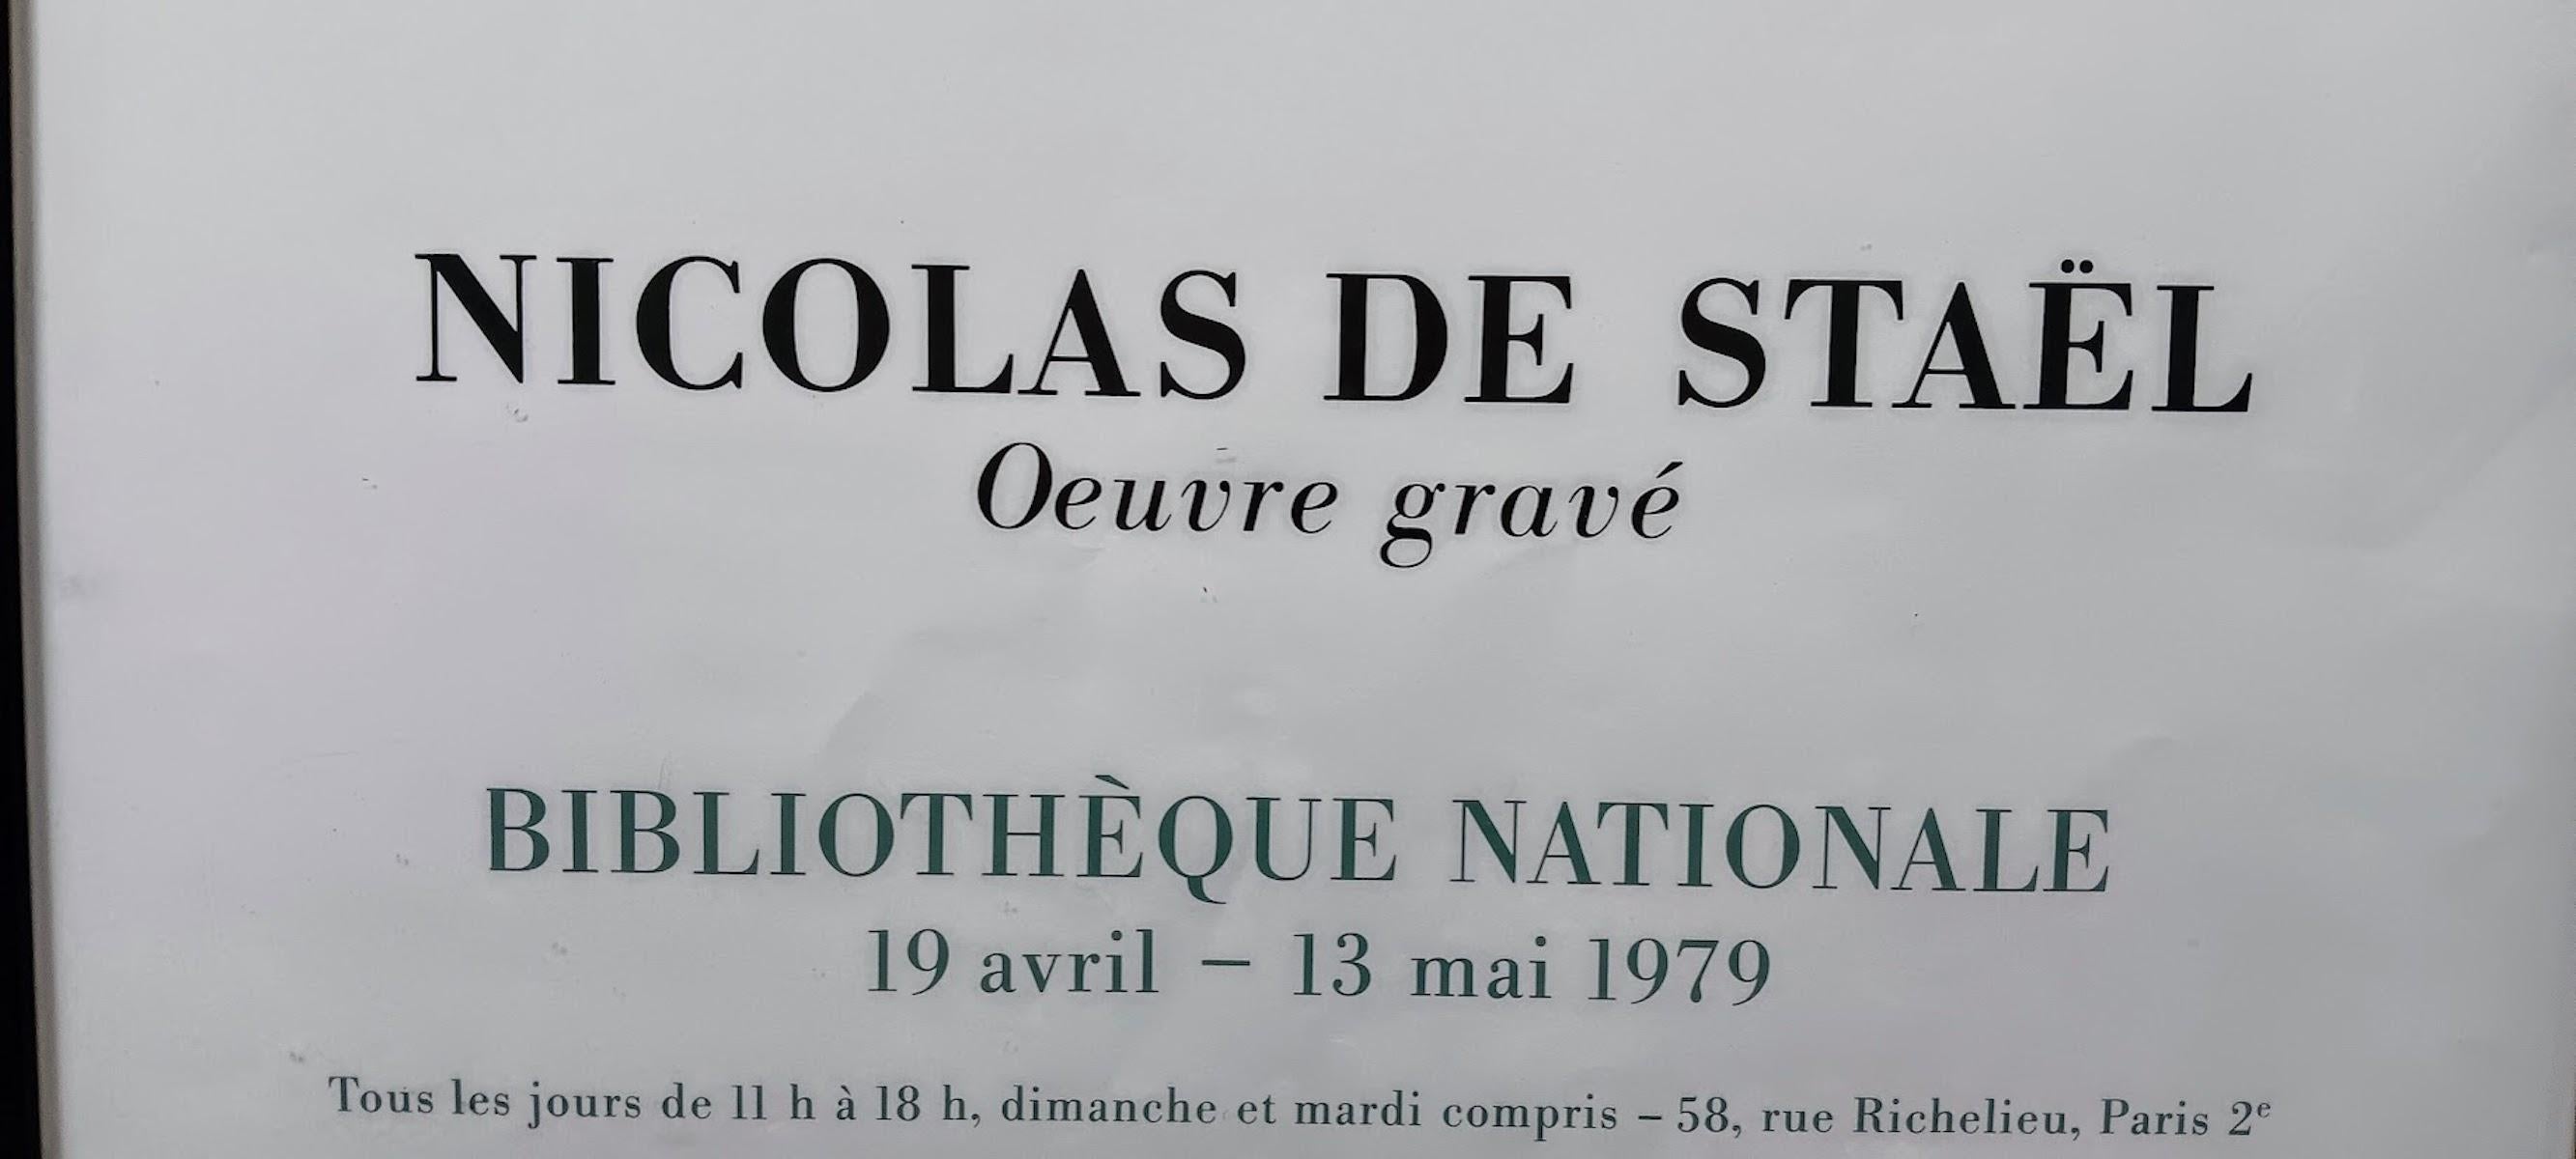  Original Print Poster by Nicolas de Stael, Oeuvre Gravé, 1979 For Sale 2